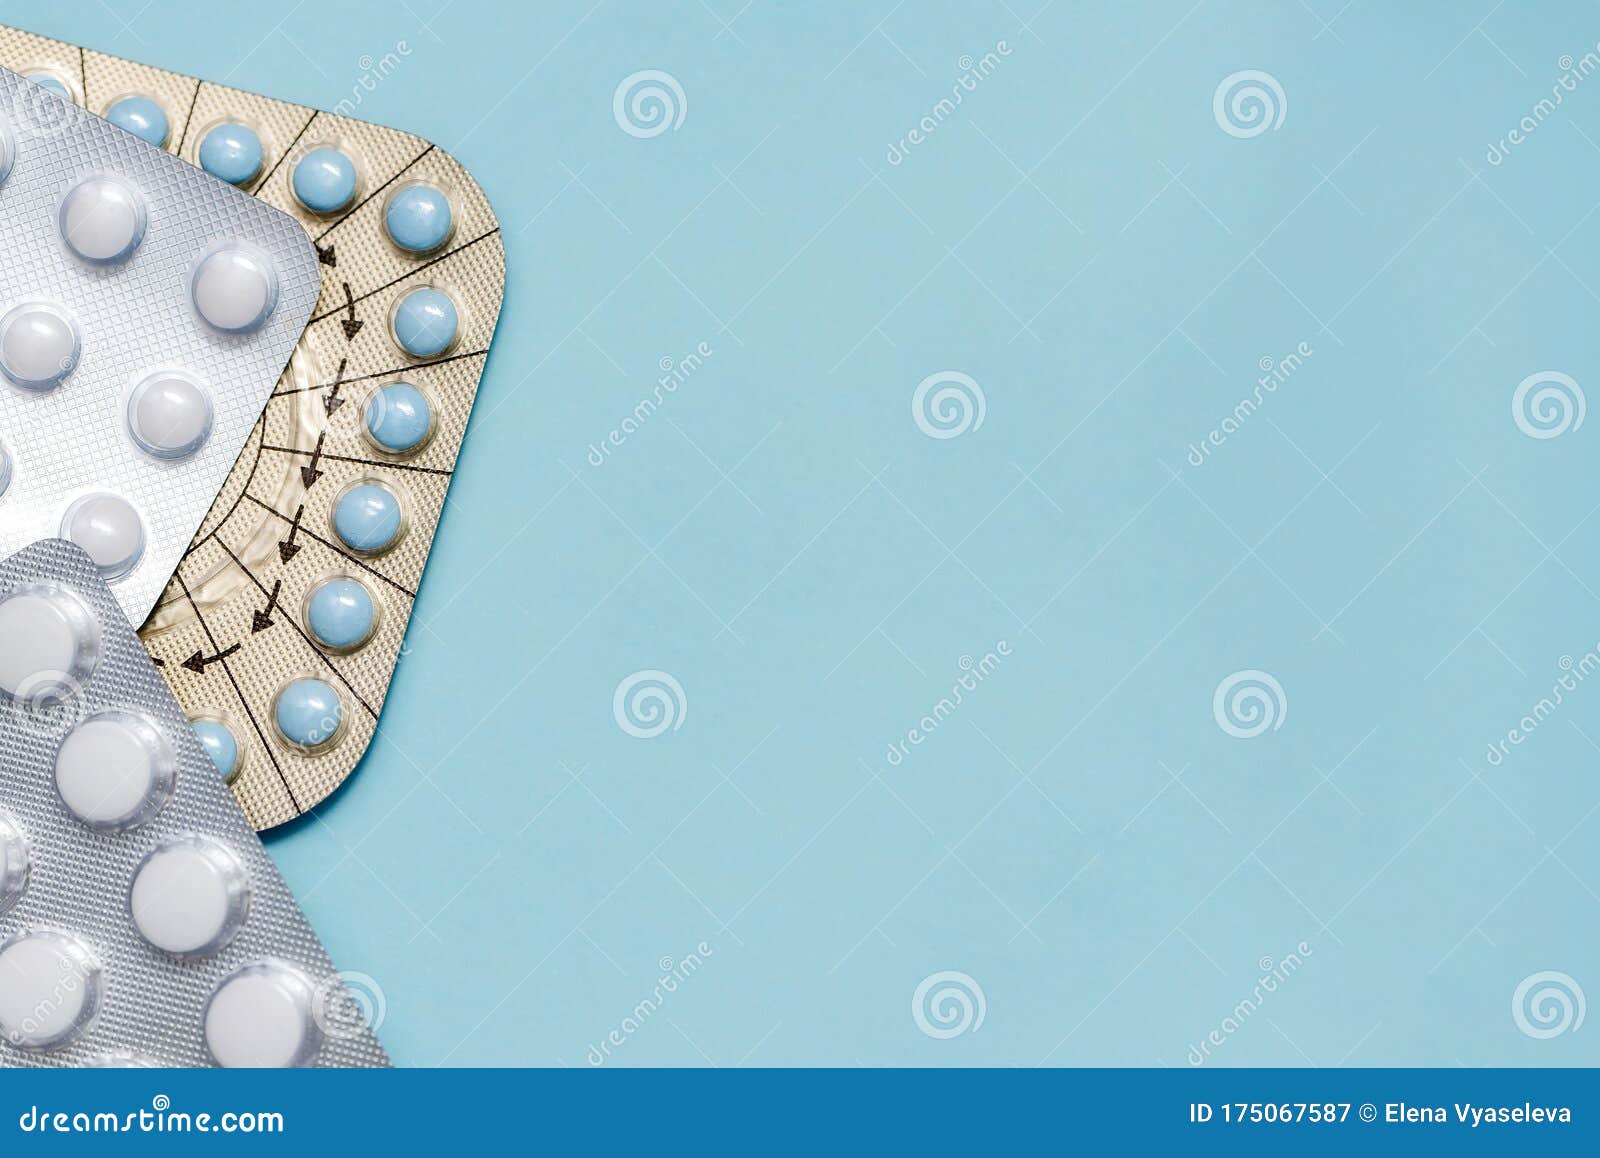 medicine pills on on blue backdrop. copy space